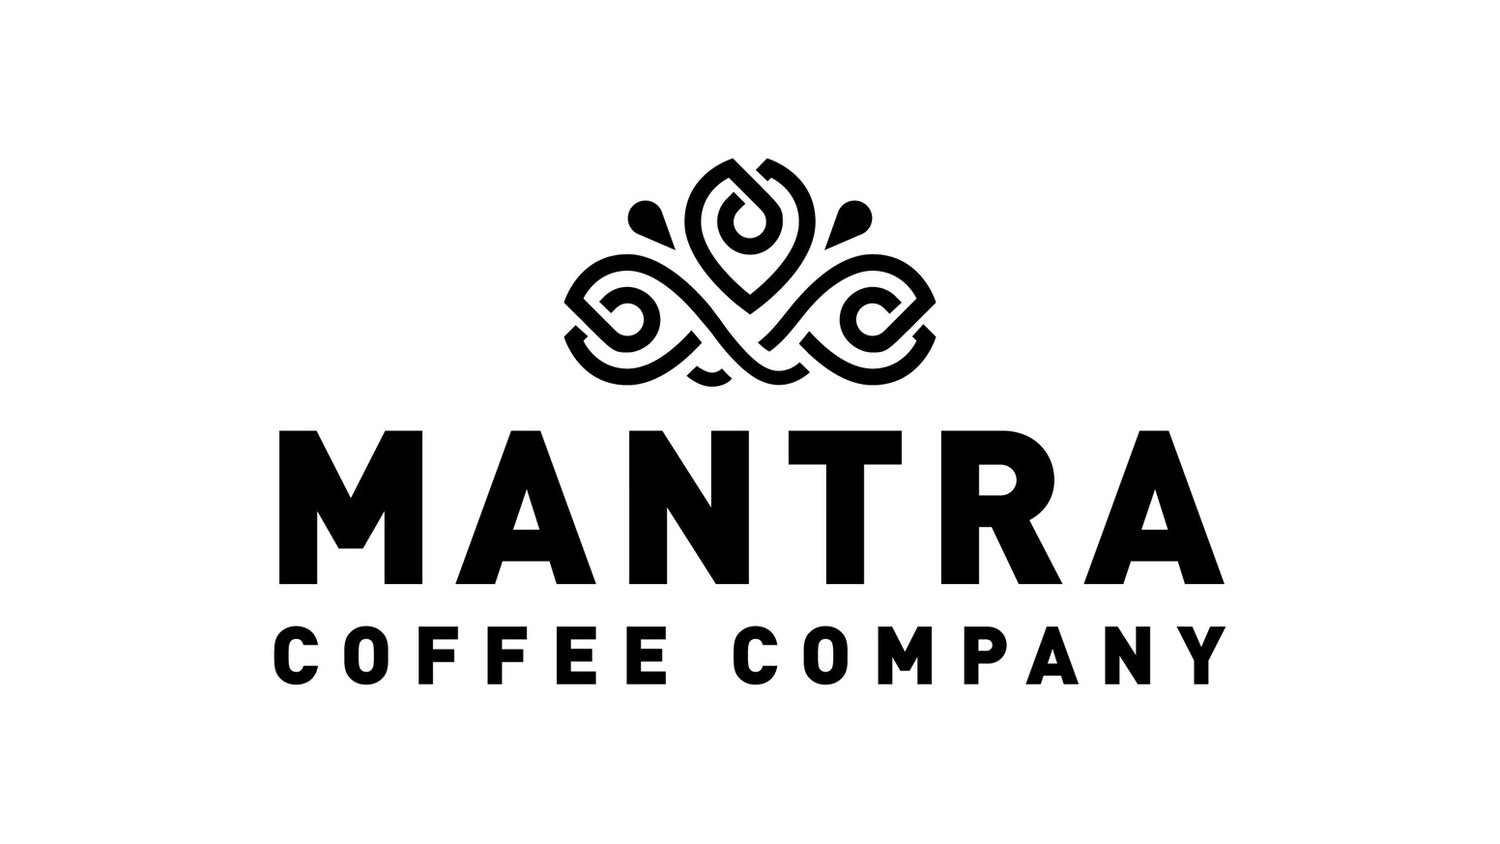 Mantra Coffee Company